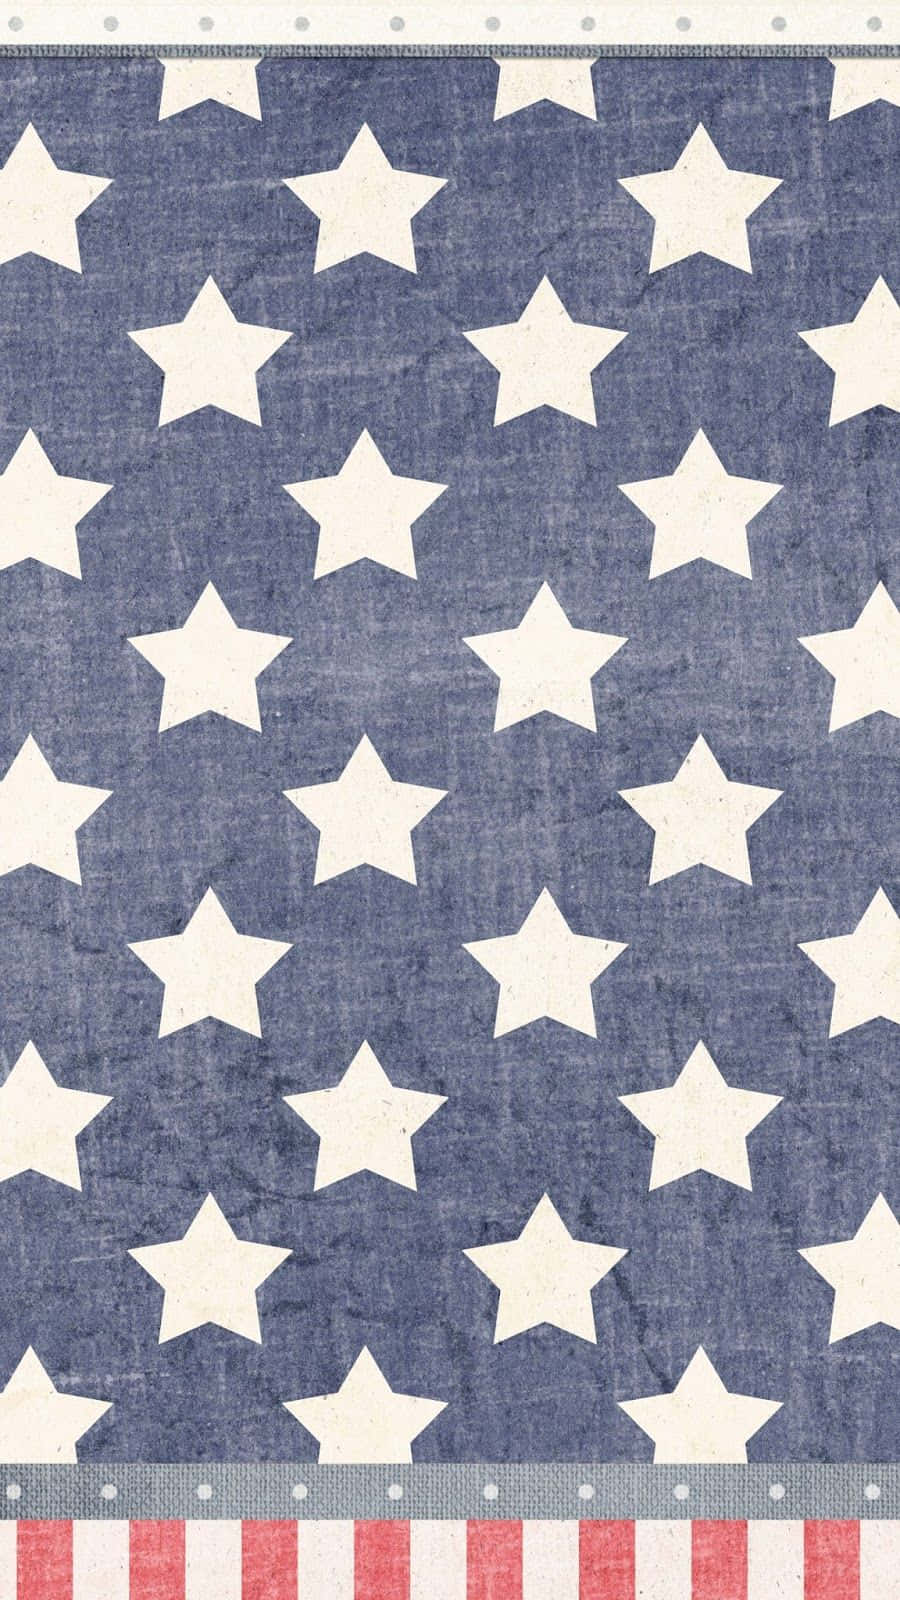 4thof July Starsand Stripes Texture Wallpaper